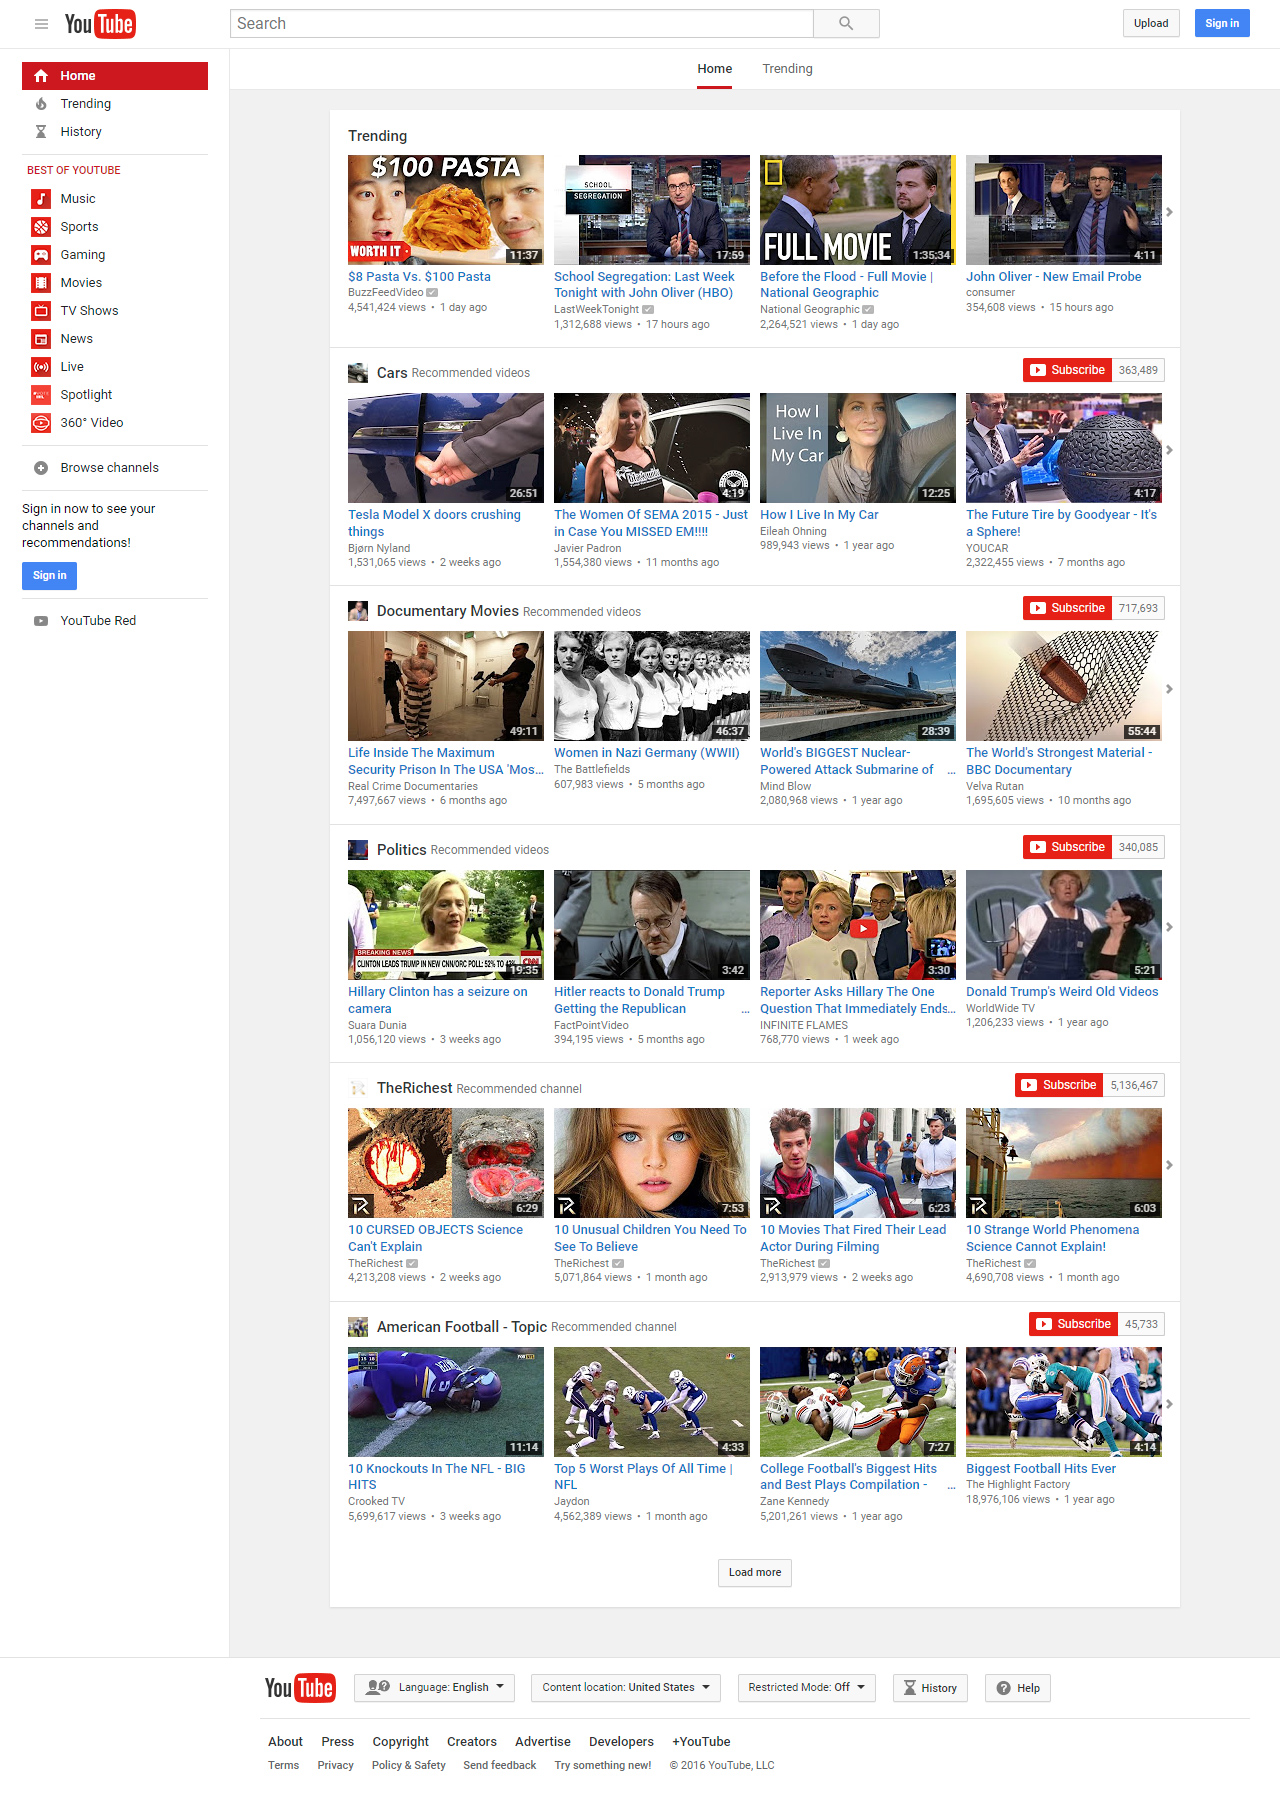 YouTube website in 2016